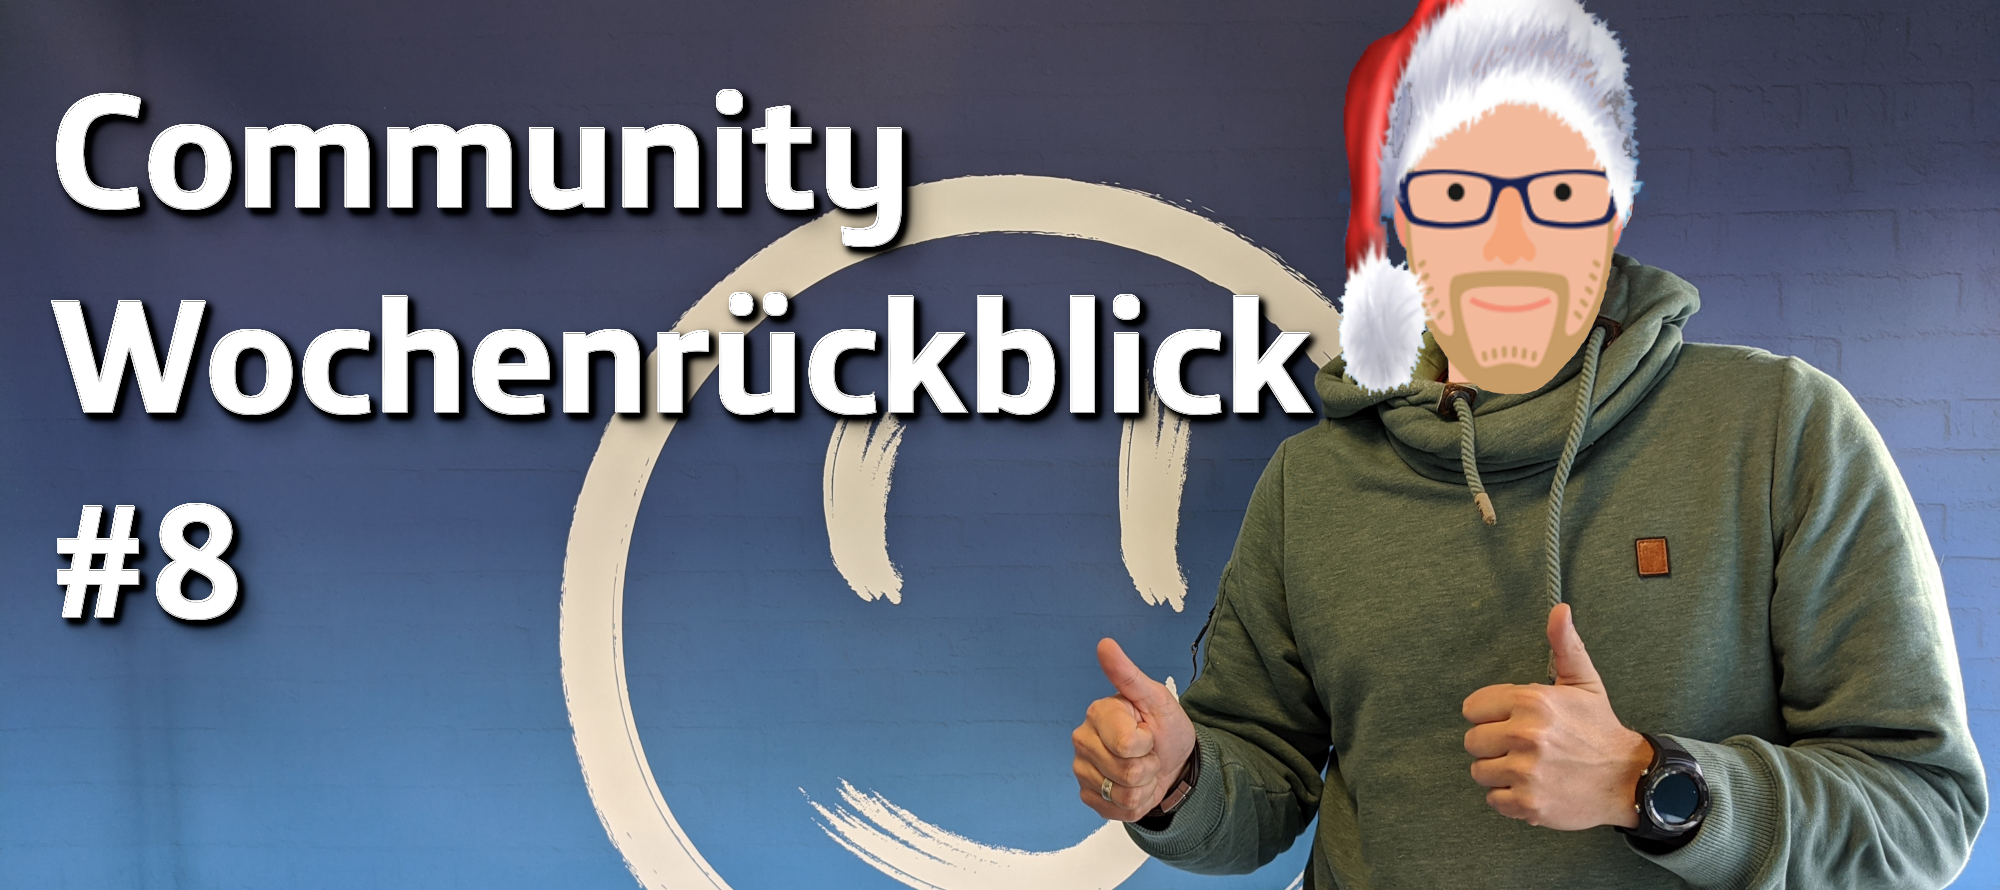 Community Wochenrückblick #8